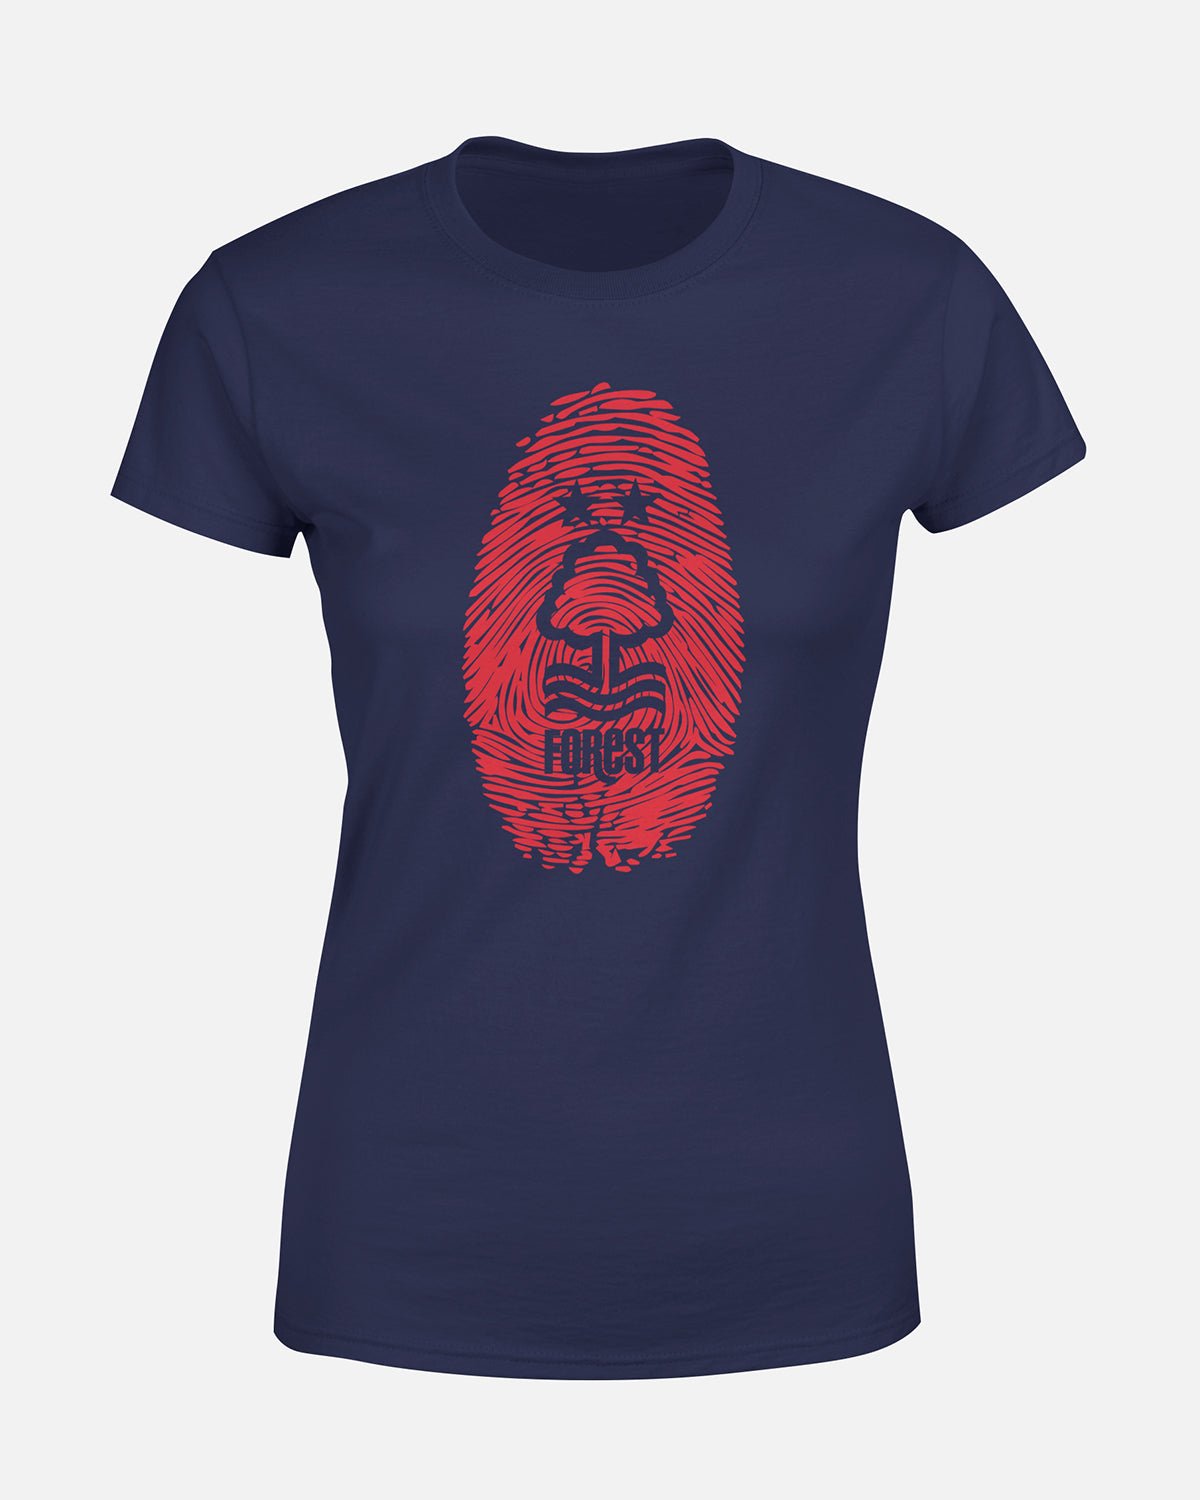 NFFC Women's Navy Fingerprint T-Shirt - Nottingham Forest FC